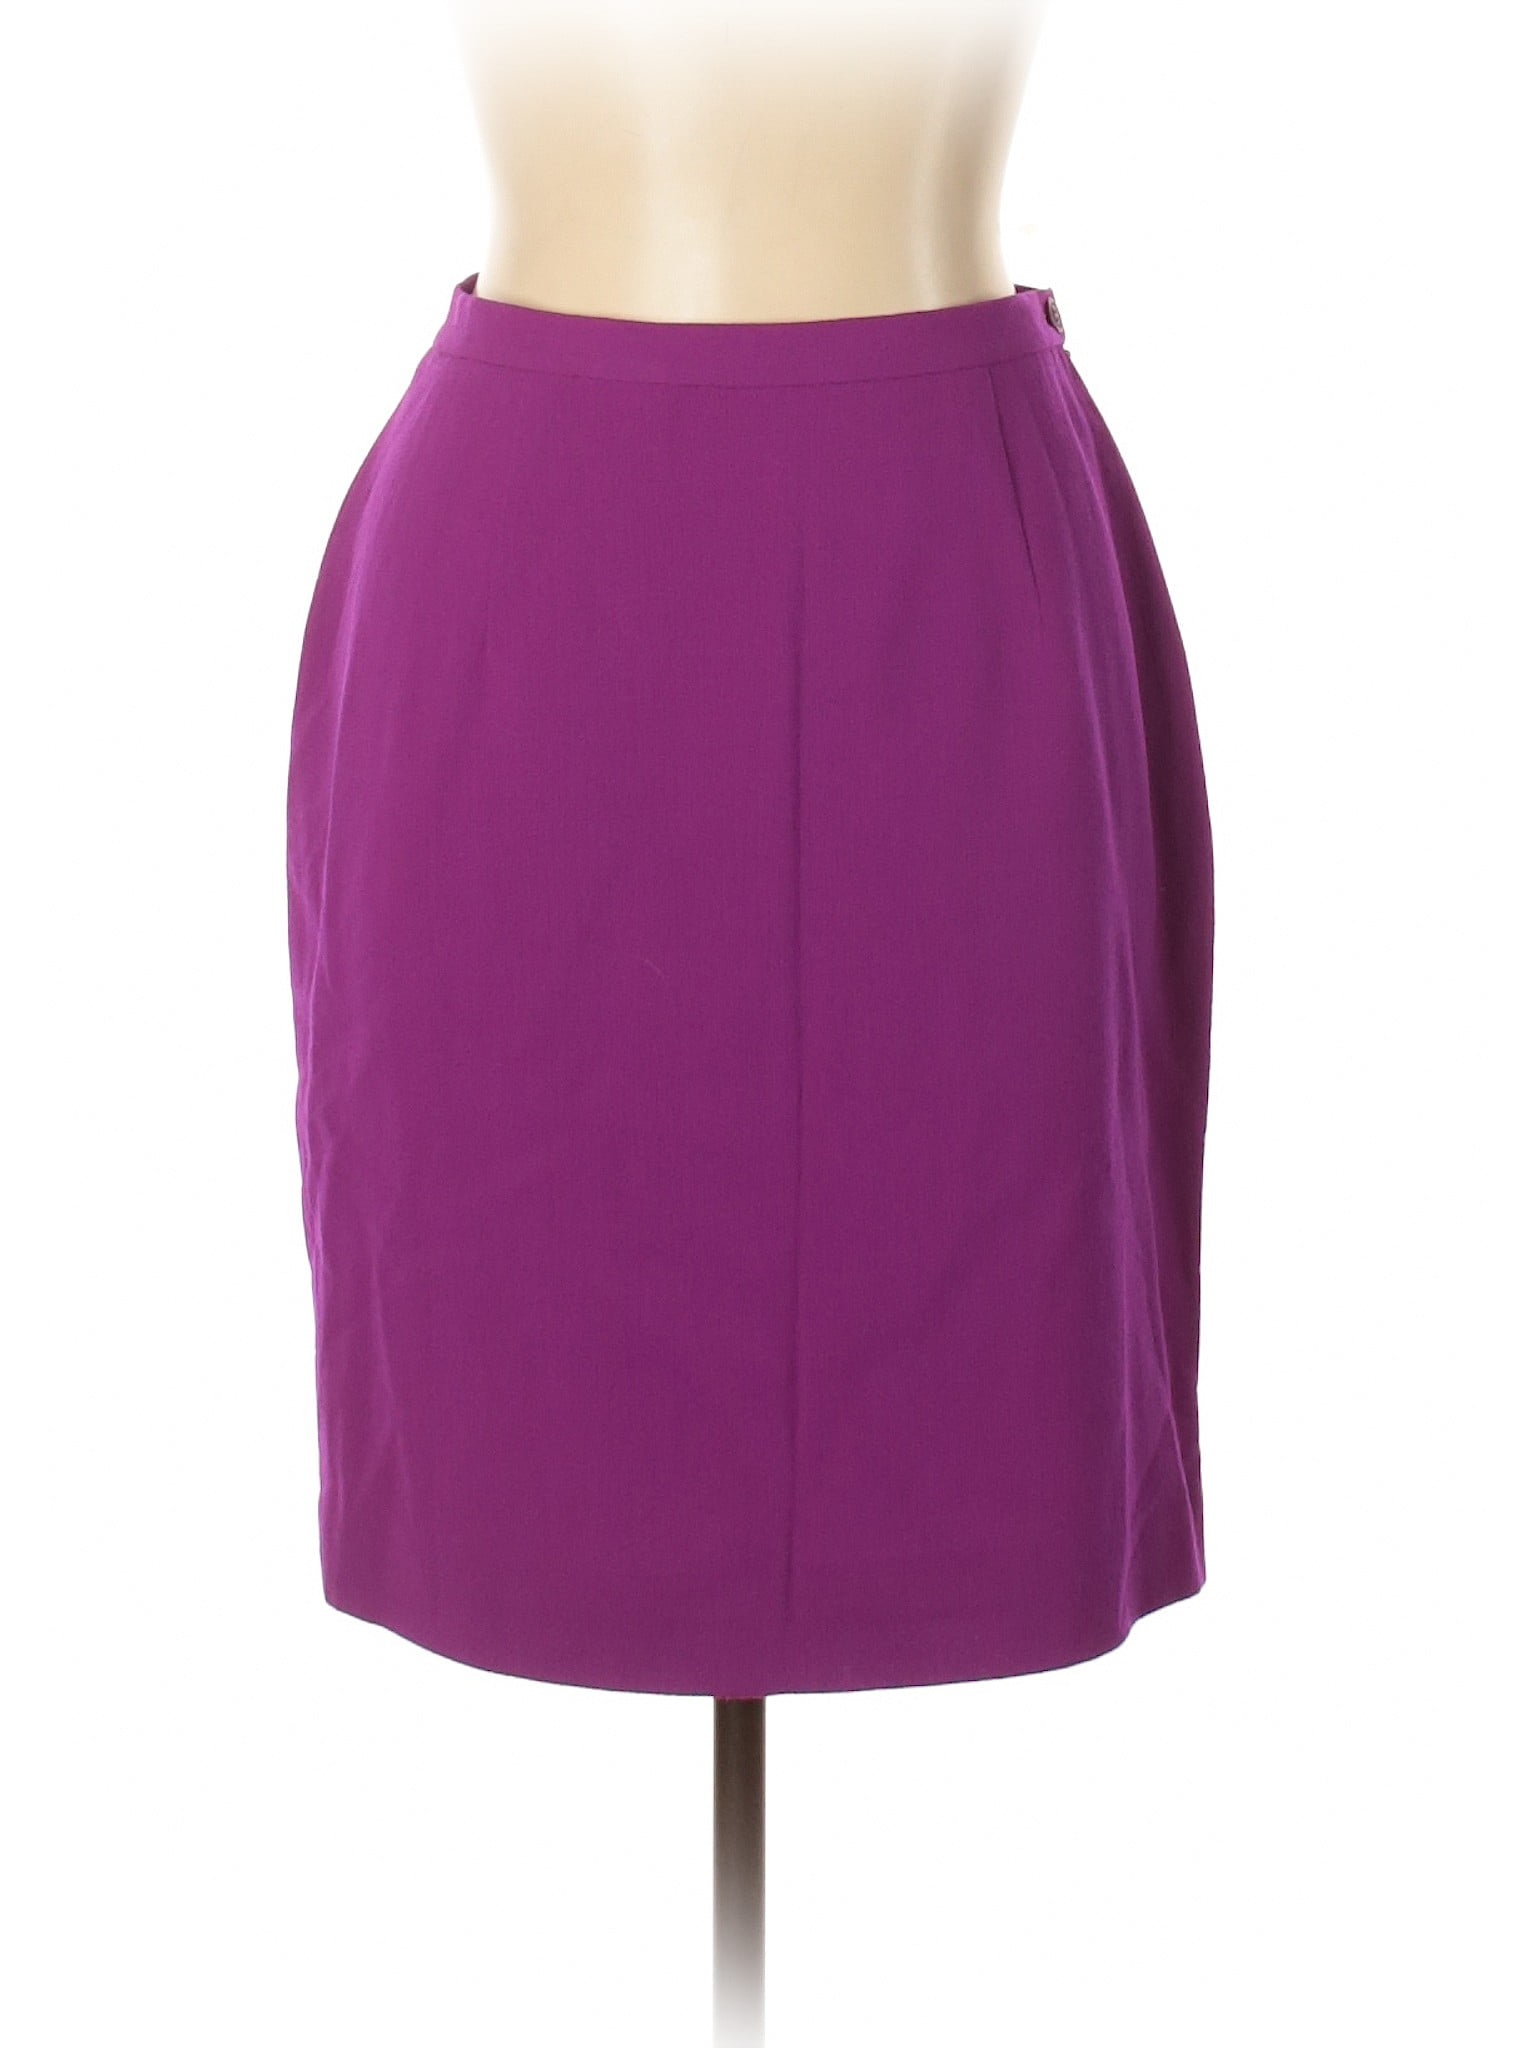 Rena Rowan - Pre-Owned Rena Rowan Women's Size 10 Petite Wool Skirt ...